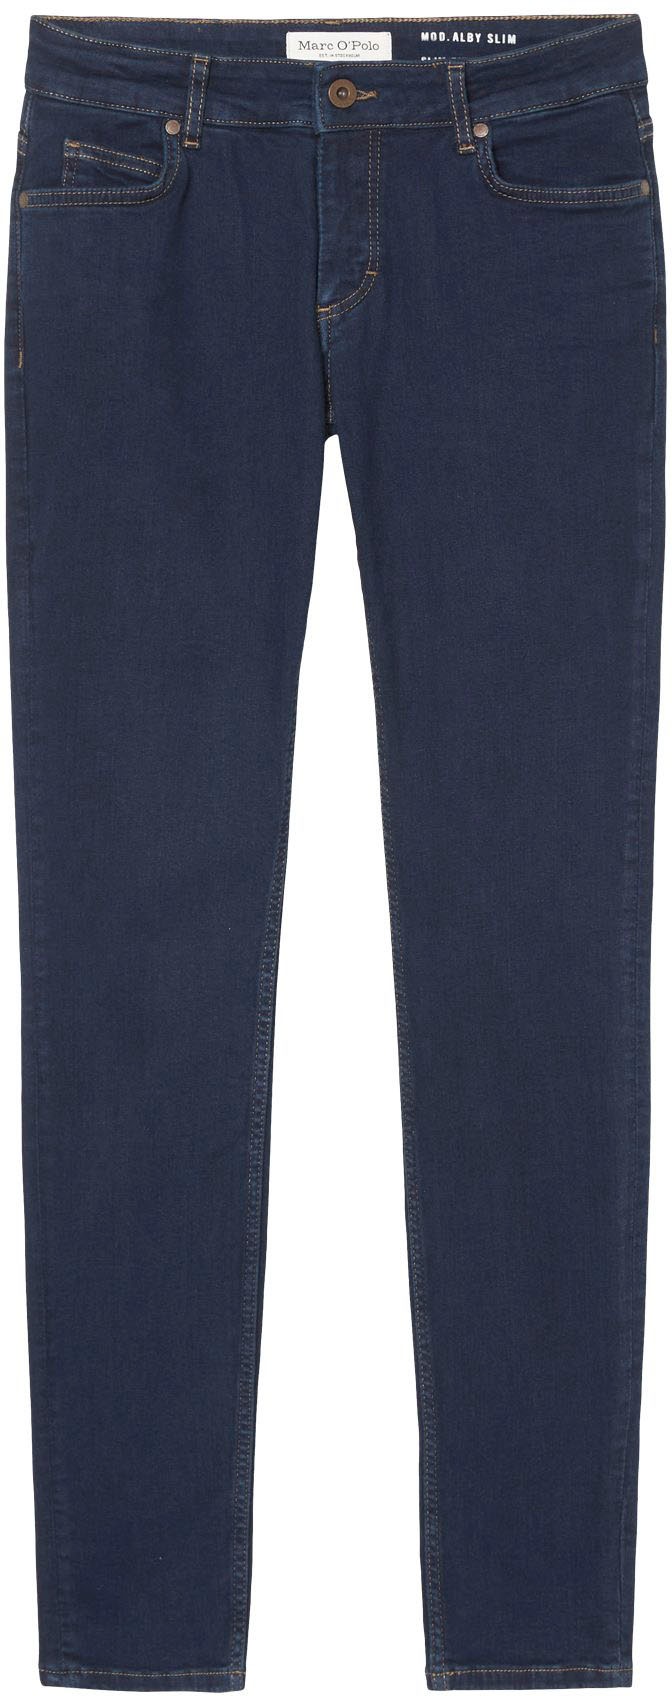 Marc O'Polo 5-Pocket-Jeans »Albi«, aus stretchigem Bio-Baumwoll-Mix